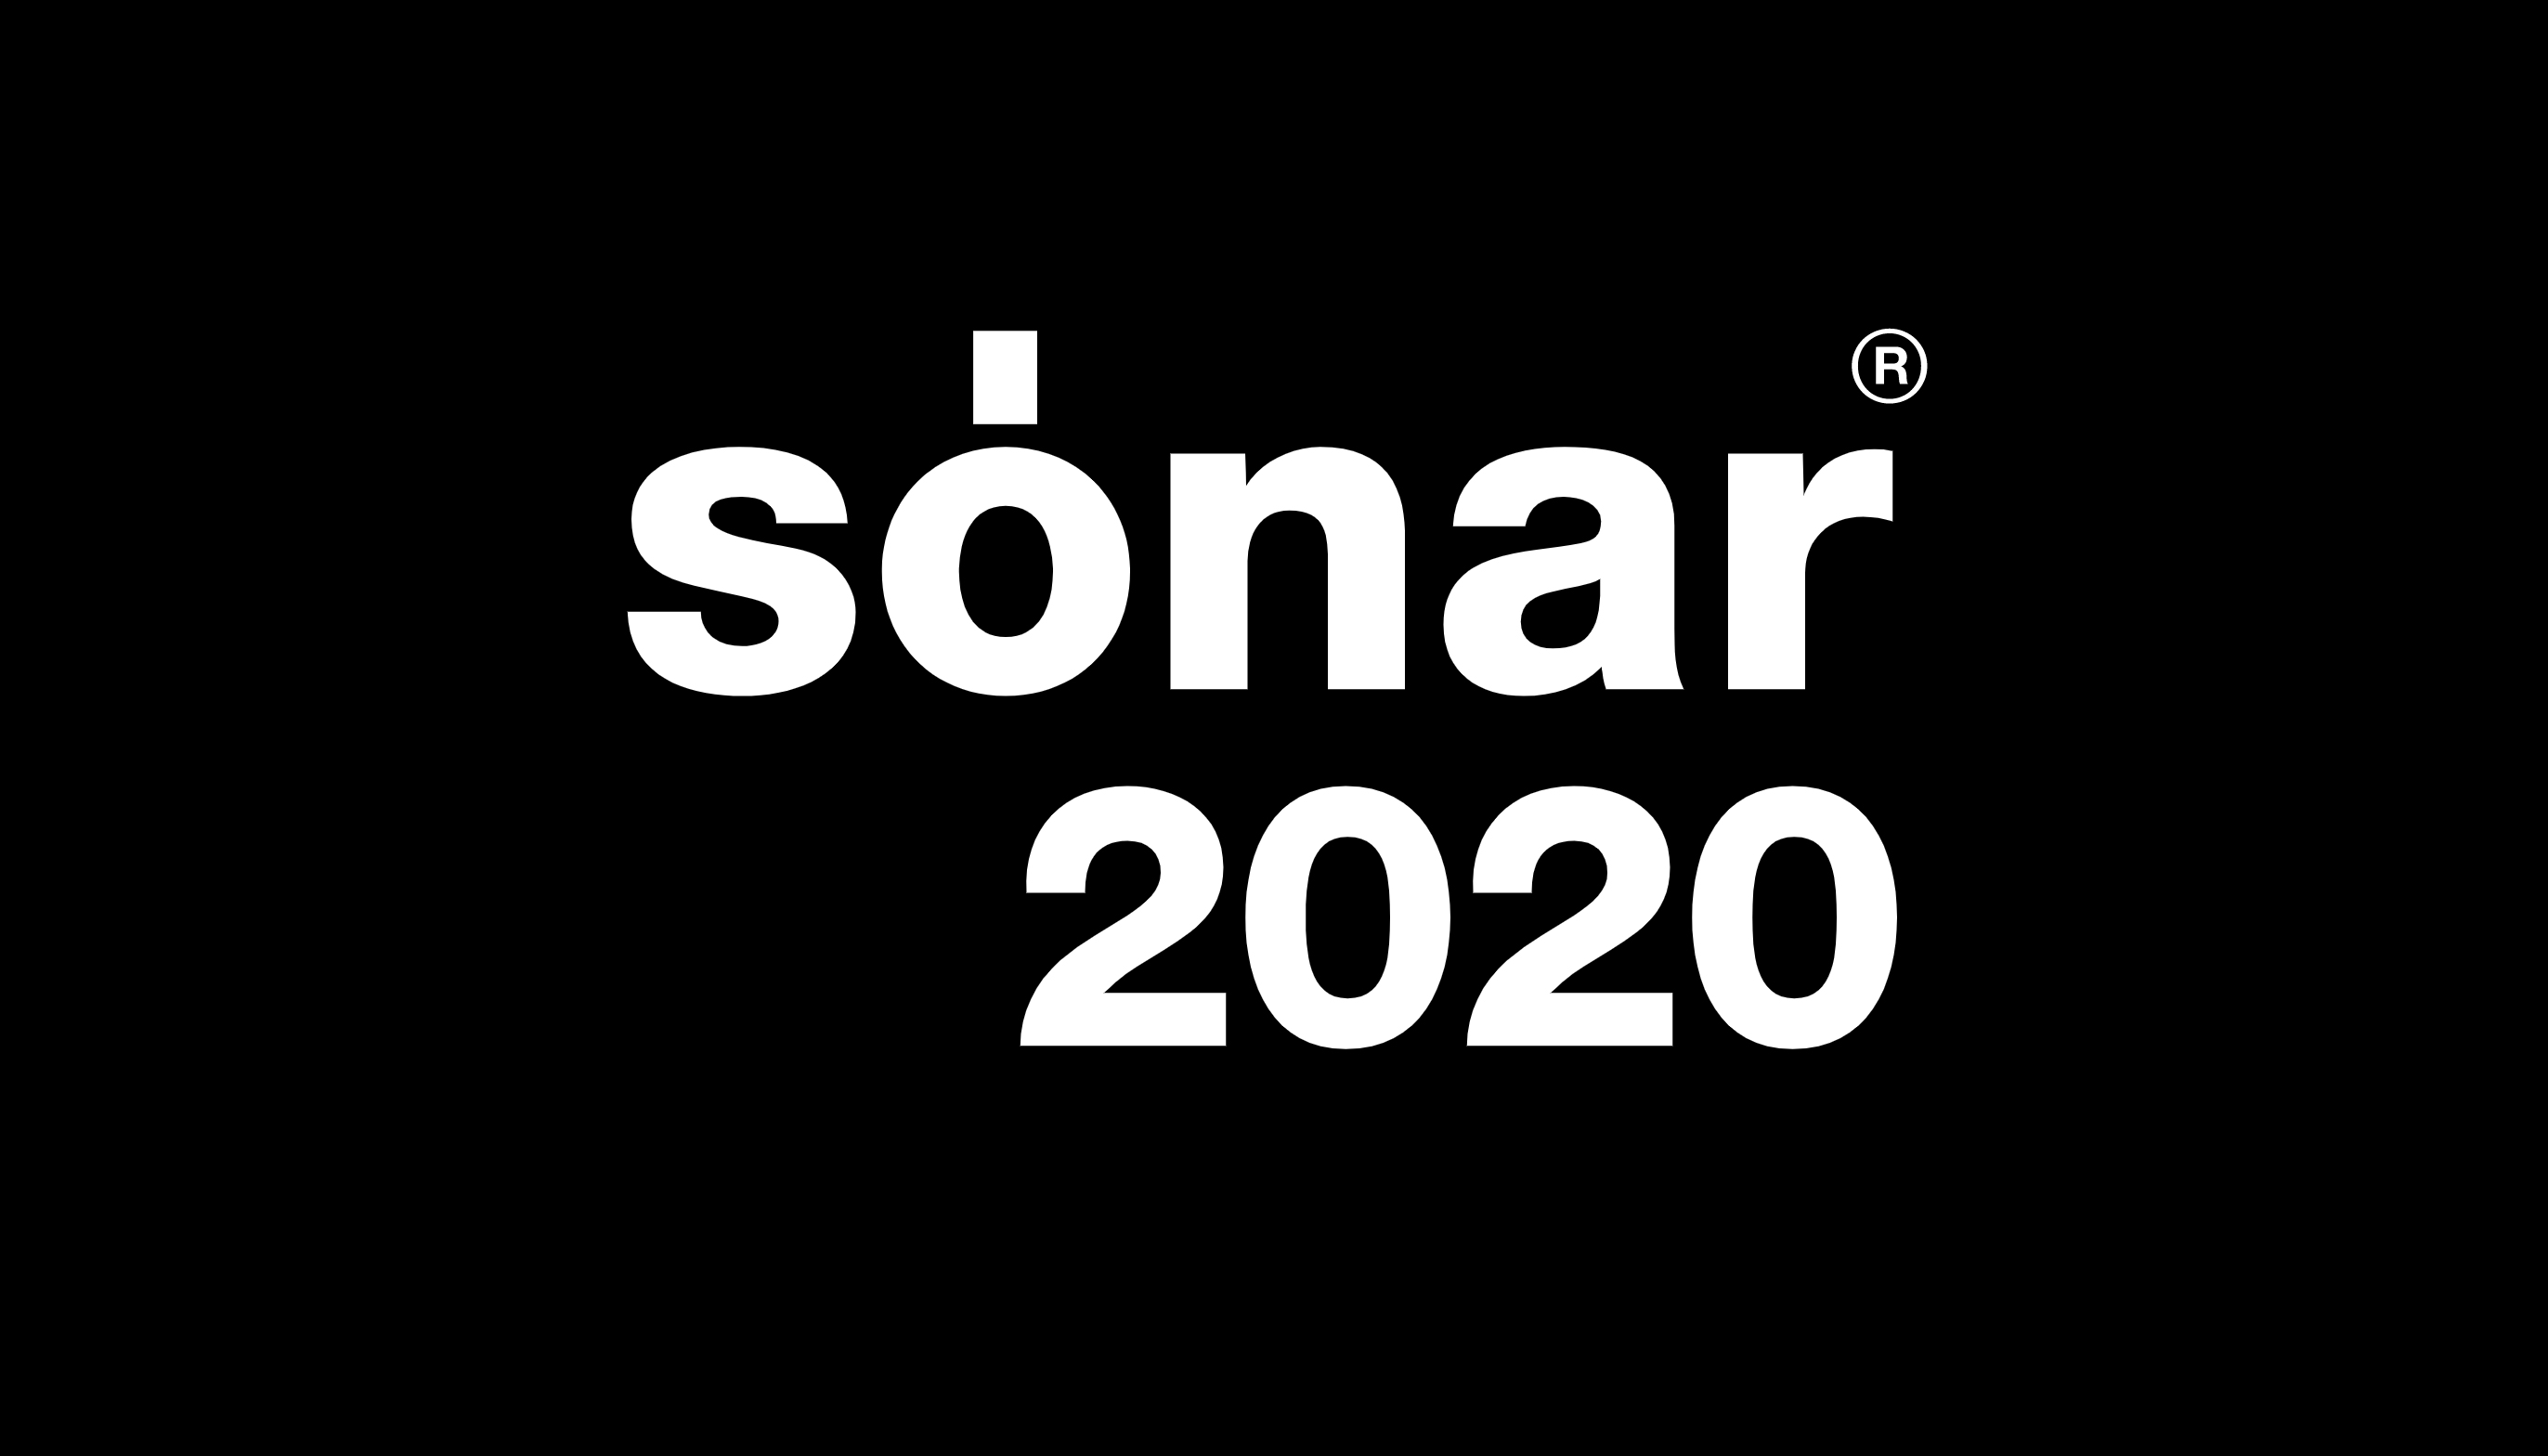 Arca y The Chemical Brothers, son parte del lineup para el Sónar Festival 2020. Cusica Plus.